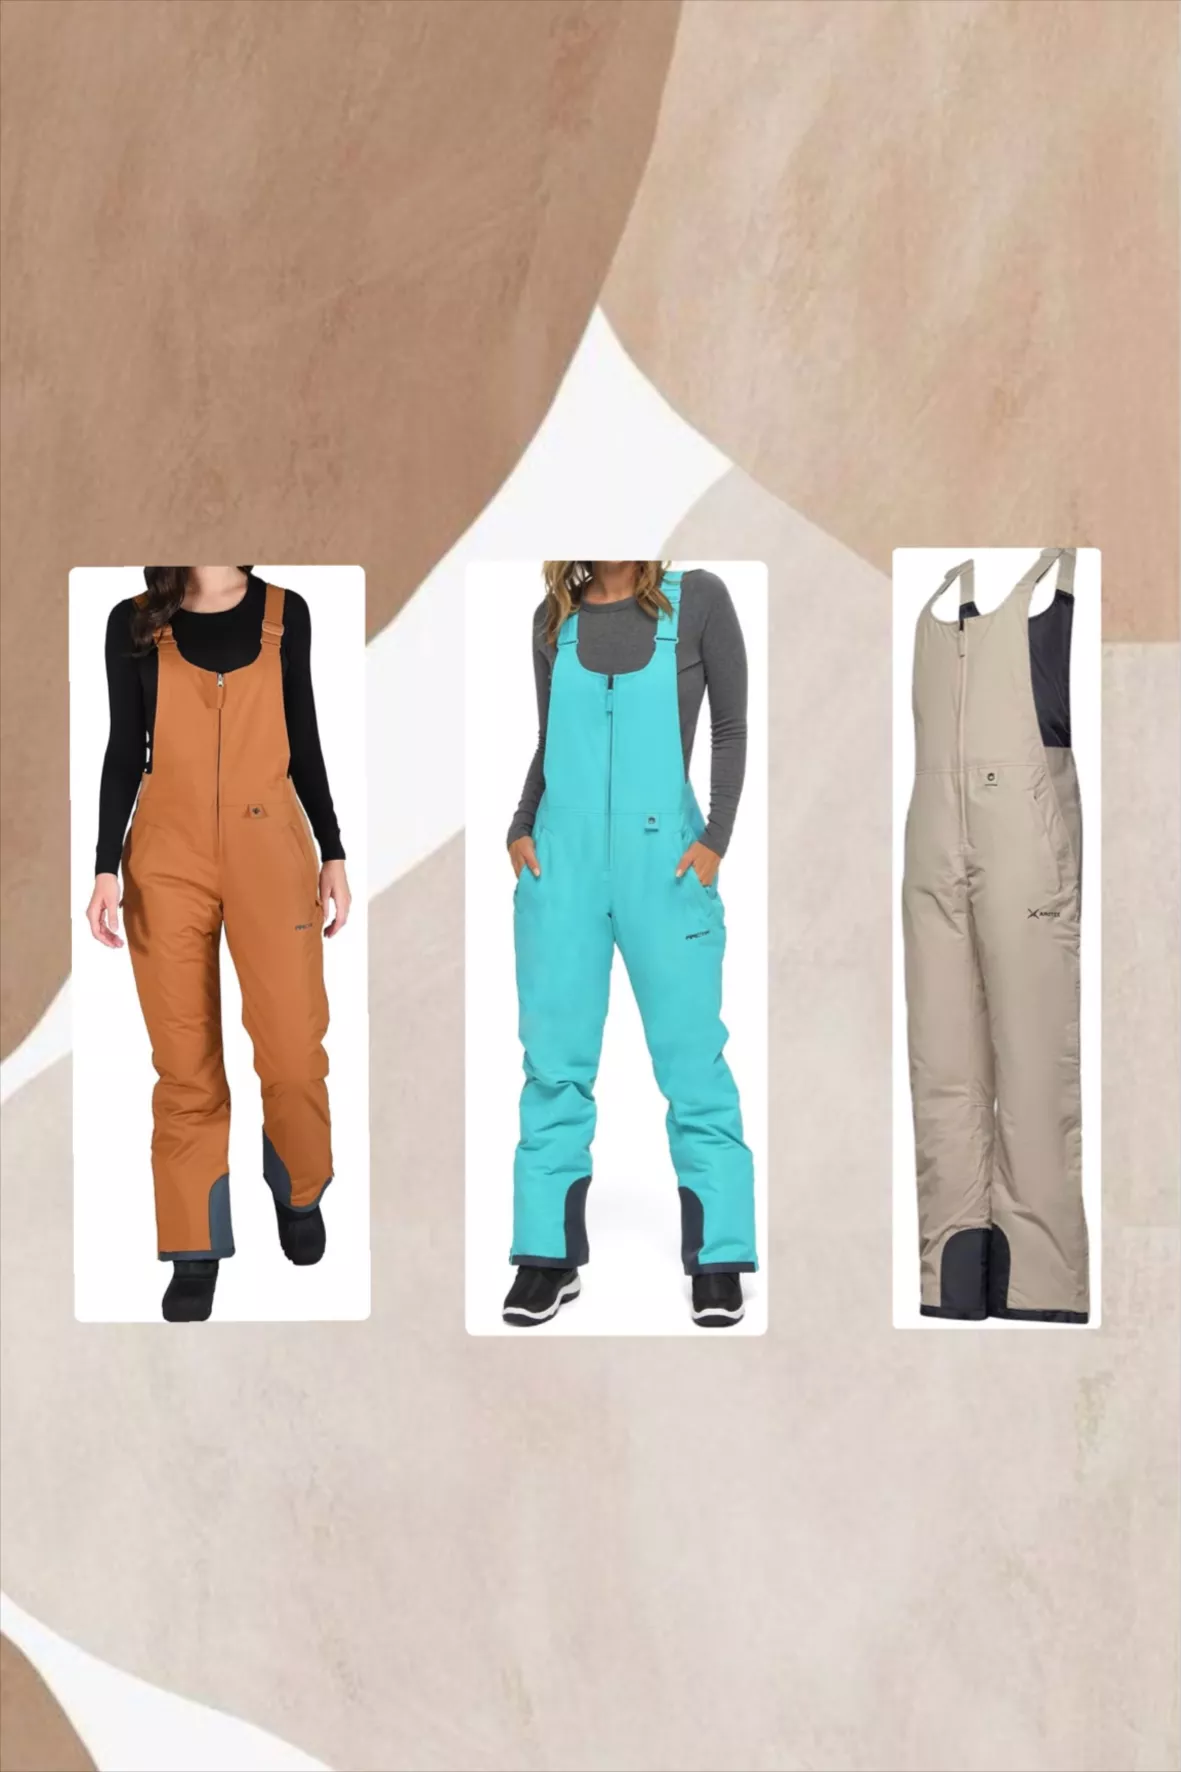 Arctix Women's Essential Insulated Bib Overalls  Womens snow pants,  Overalls outfit, Insulated bib overalls